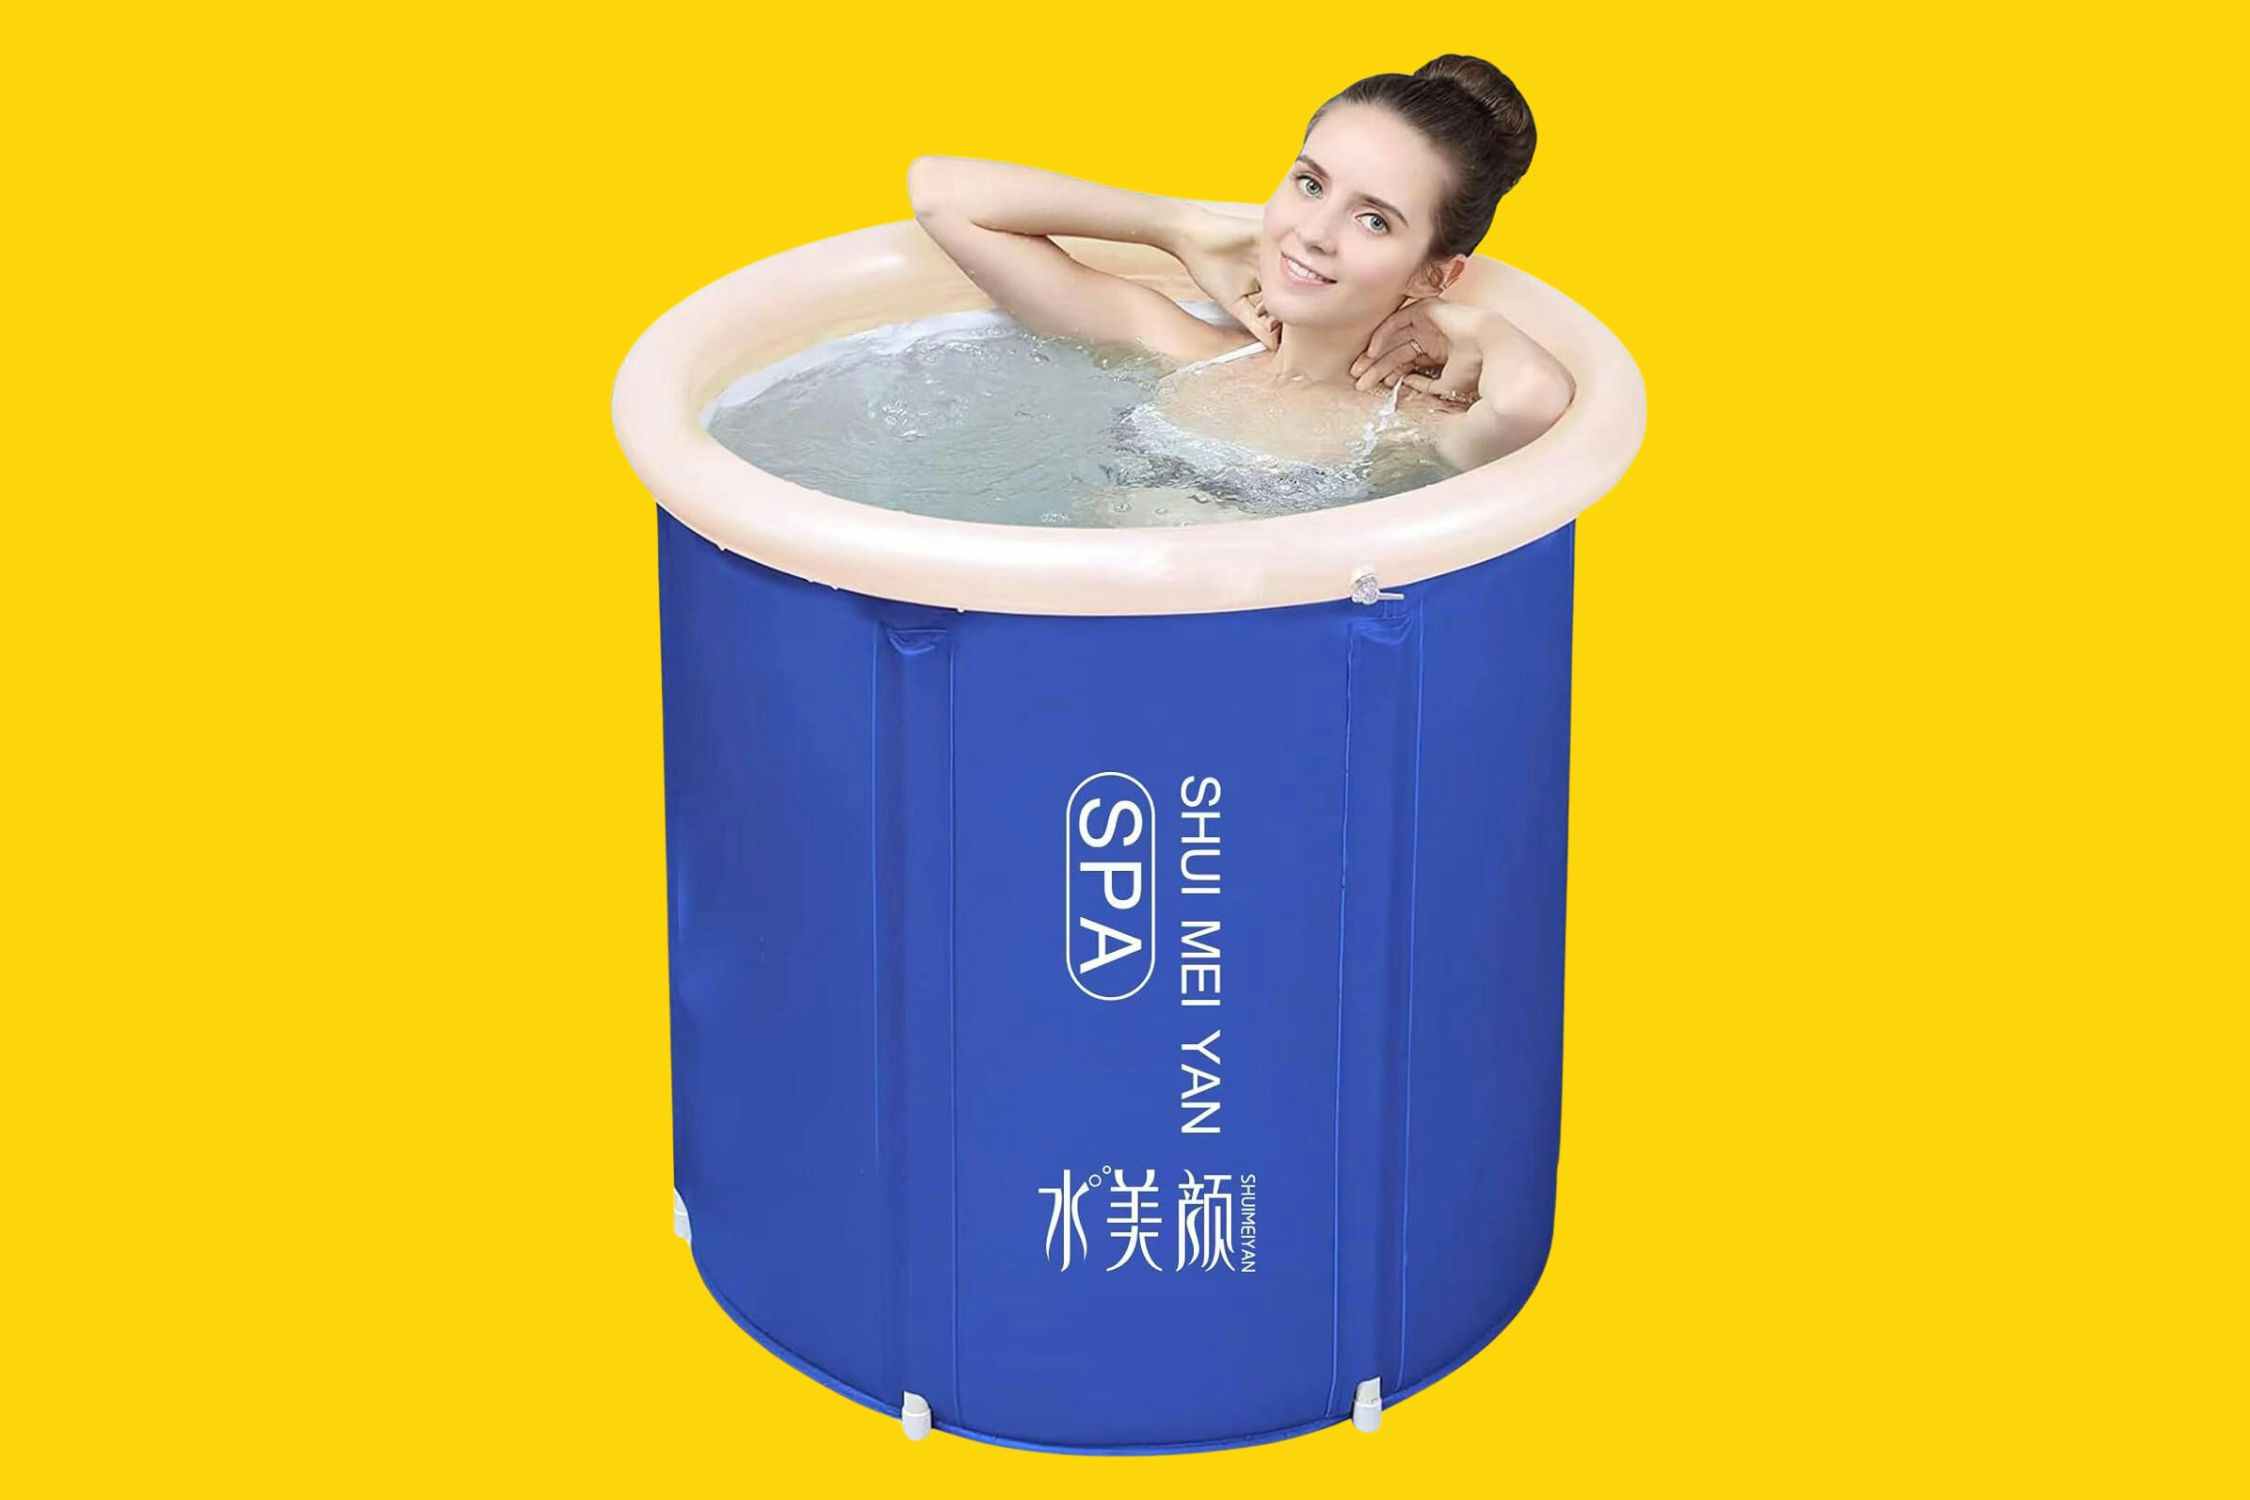 Large Ice Bath Tub, Just $24.99 on Amazon (Reg. $50)